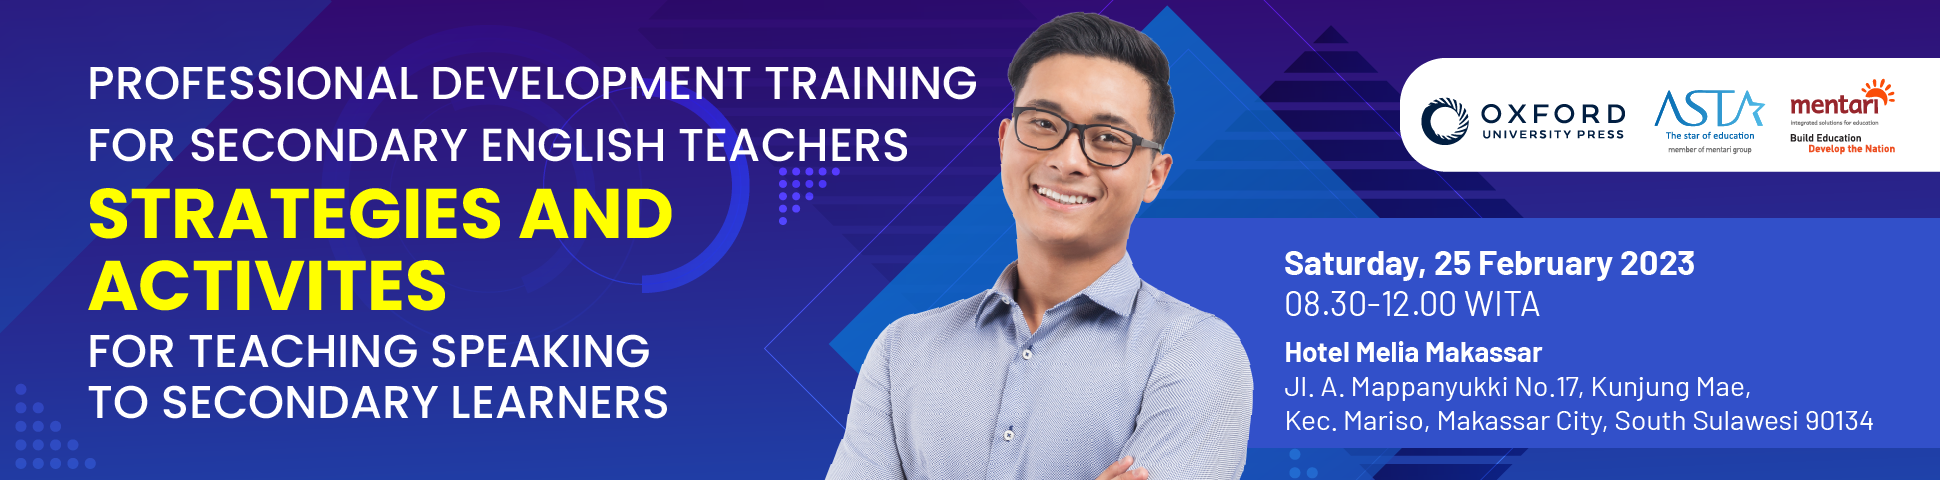 Professional Development Training for Secondary English Teachers - MAKASSAR